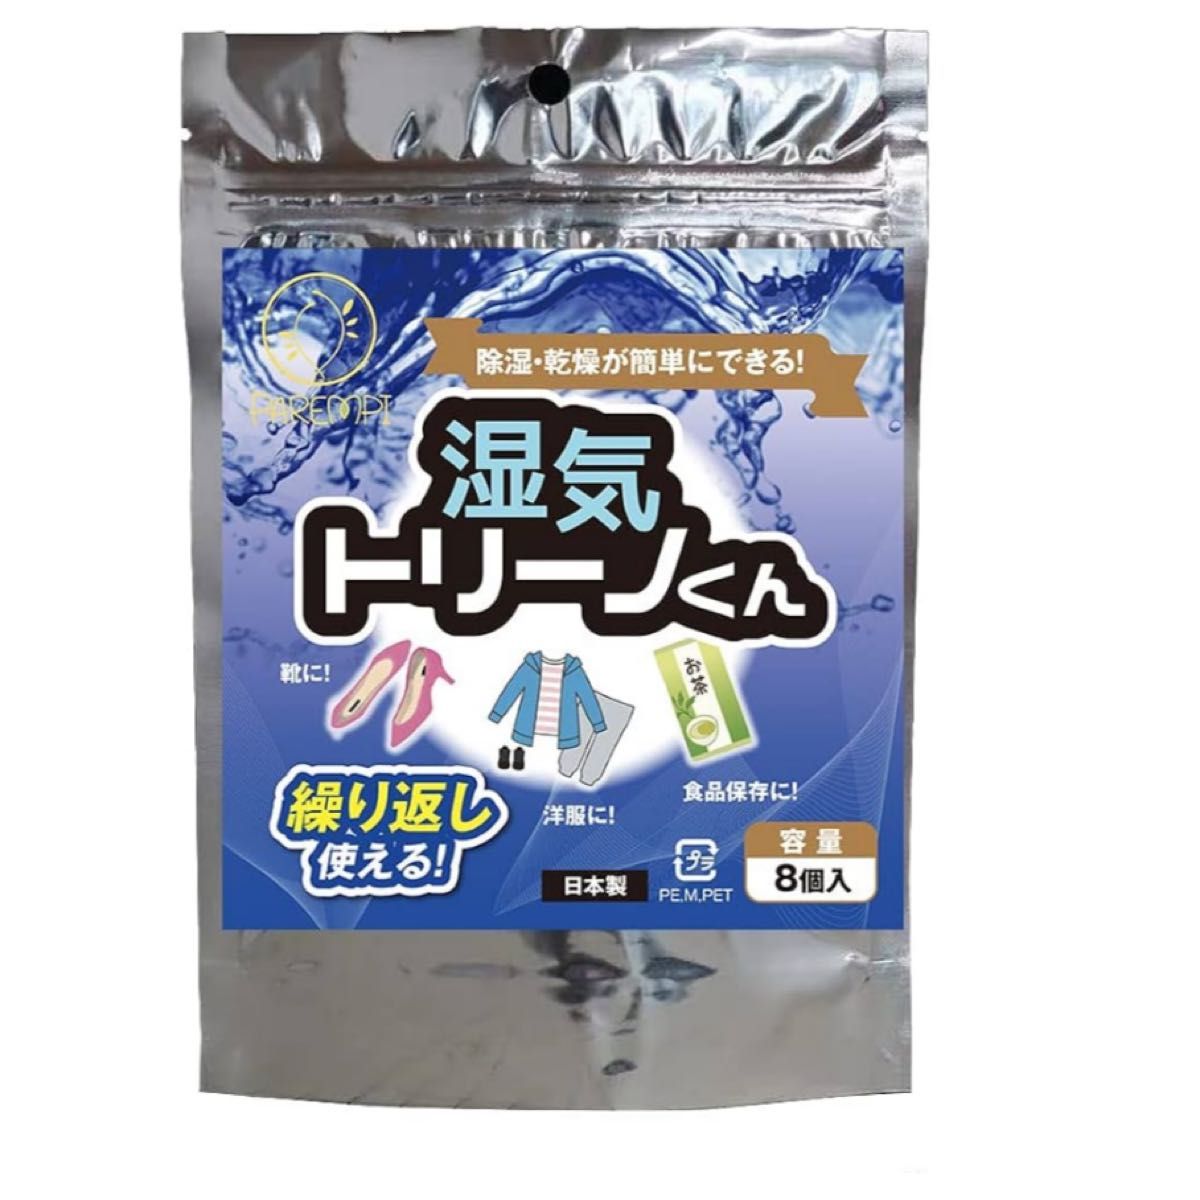 Parempi シリカゲル 1袋8個入り くりかえし 再利用シリカゲル 保存 除湿剤 防湿剤 吸湿剤 日本製 湿気トリーノくん